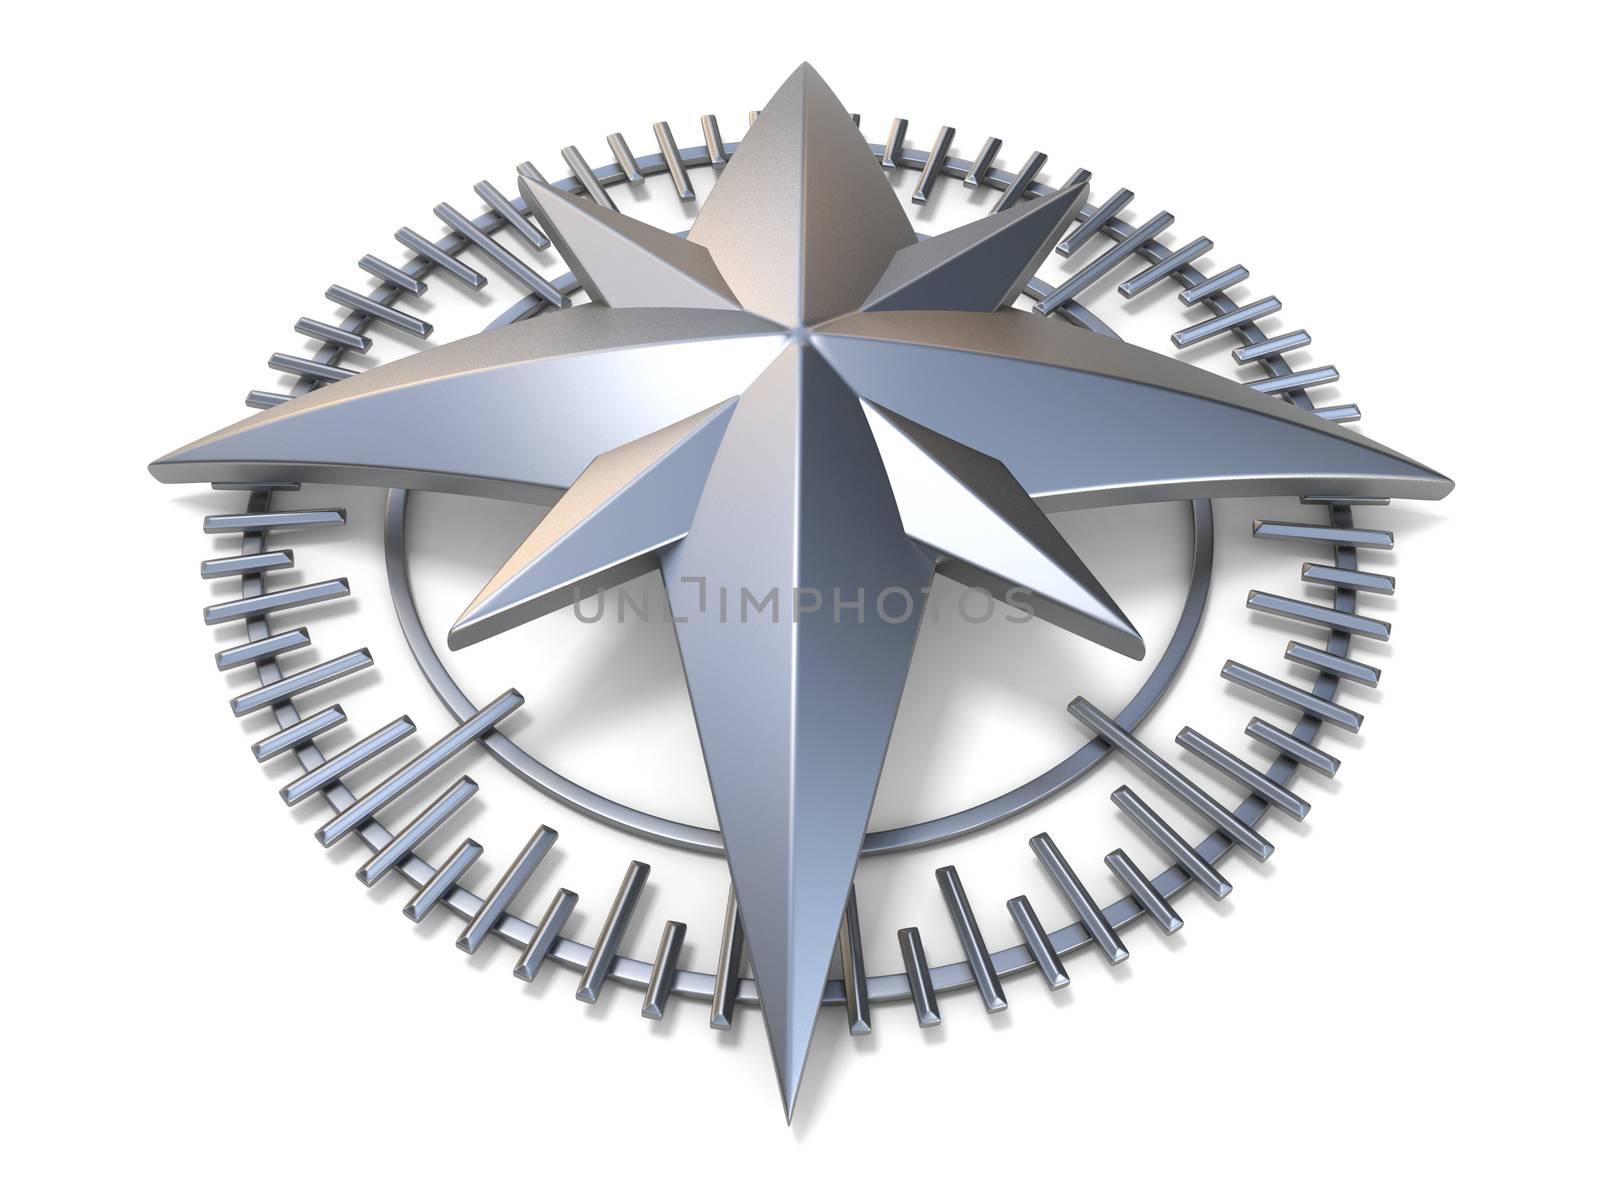 Metallic compass rose 3D by djmilic